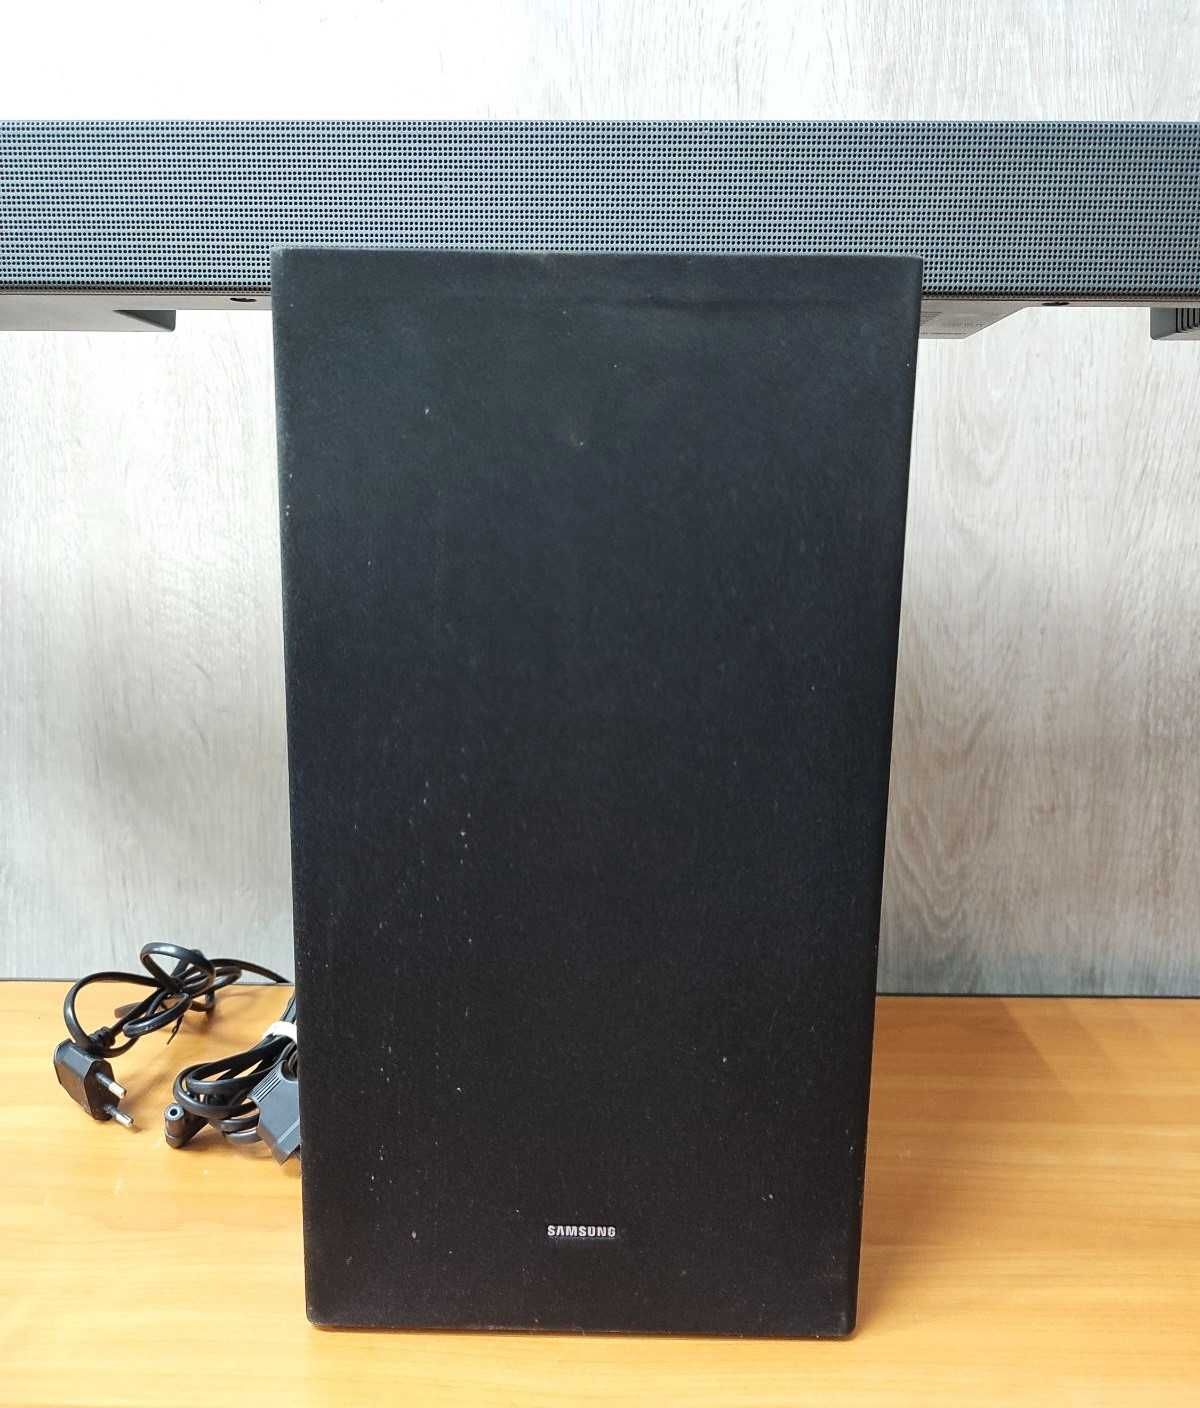 Саундбар Samsung HW-Q600C